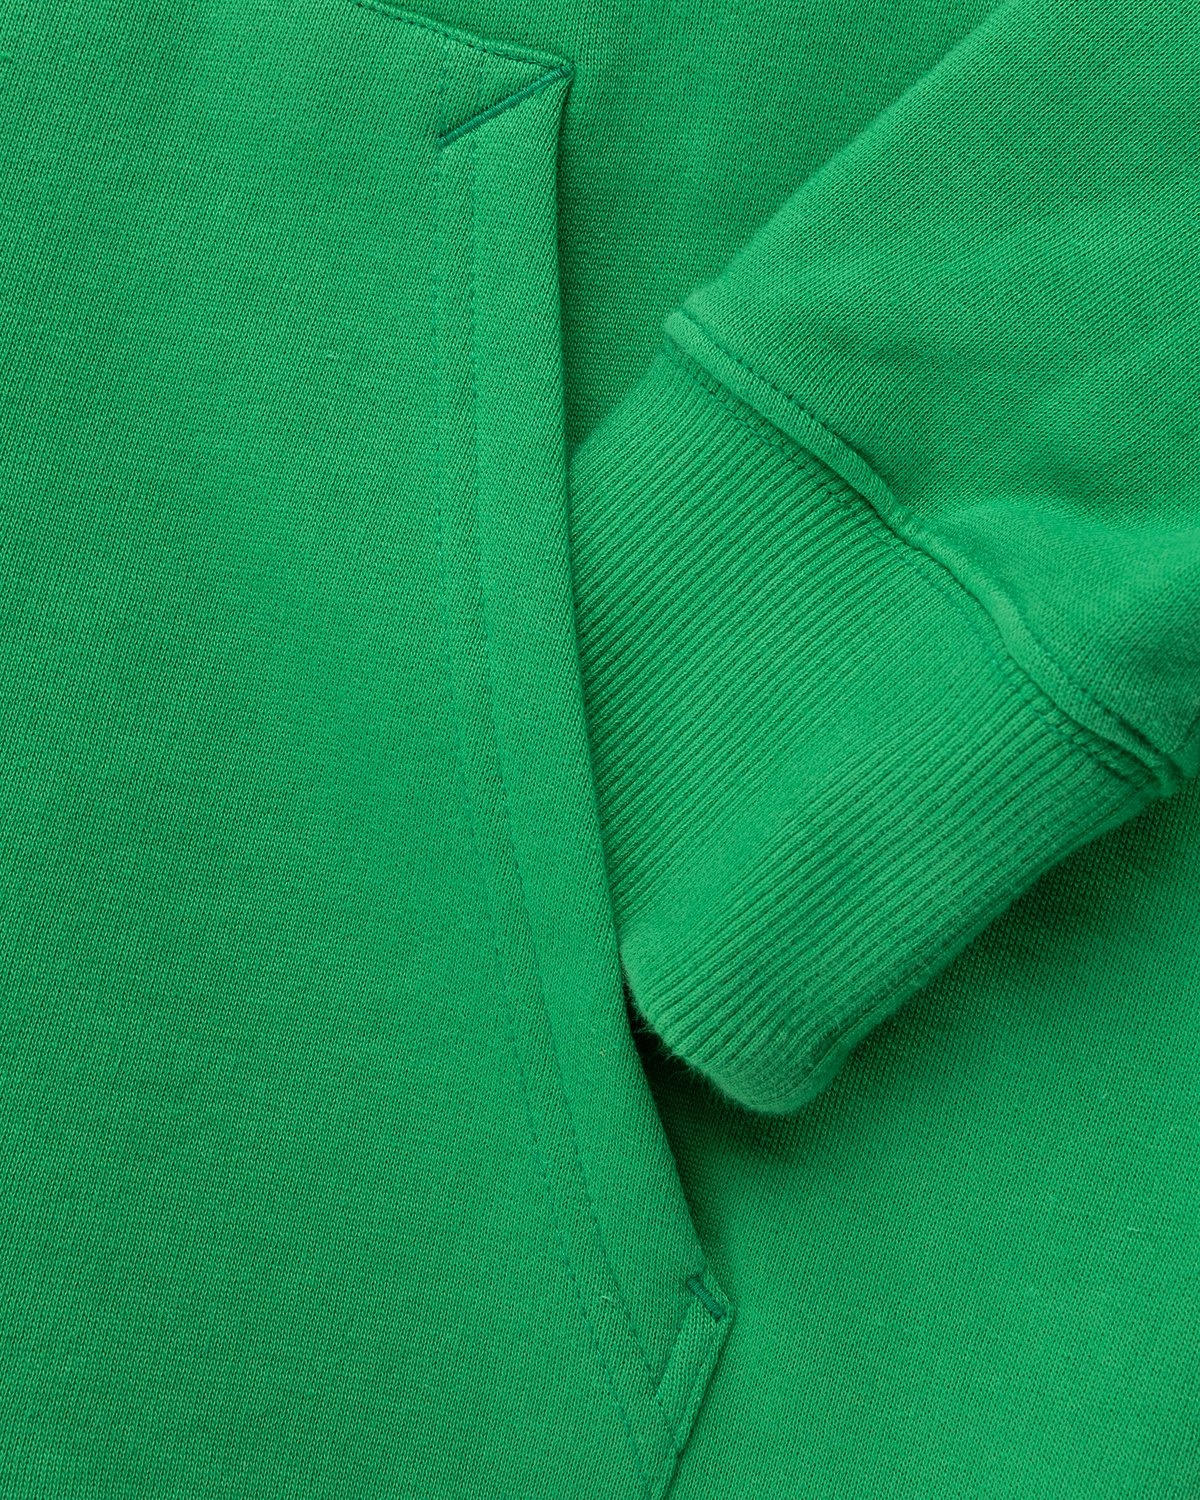 J.W. Anderson – Classic Logo Hoodie Green - Sweats - Green - Image 5